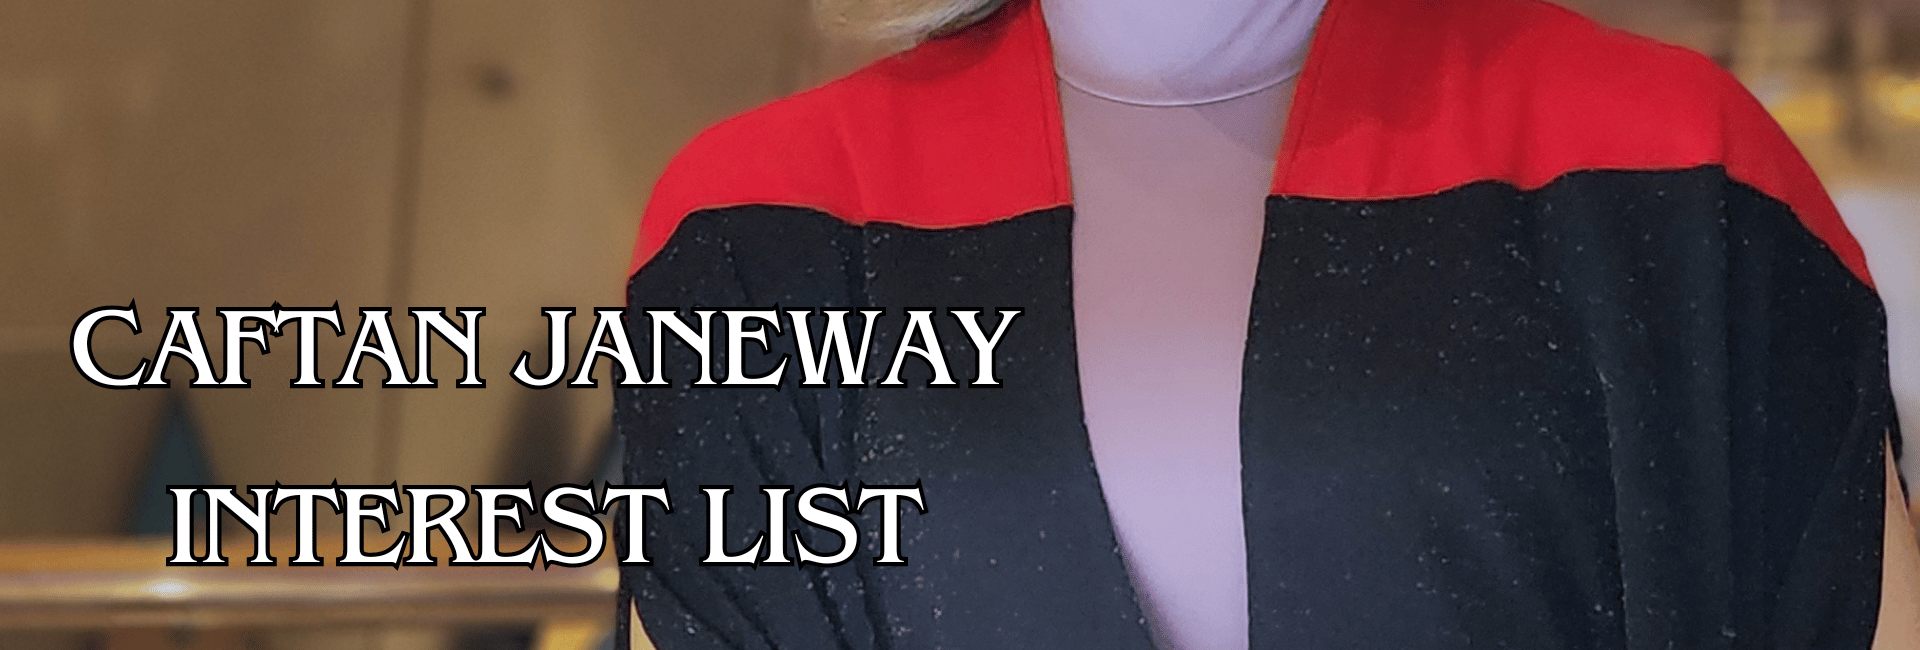 Caftan Janeway Interest List